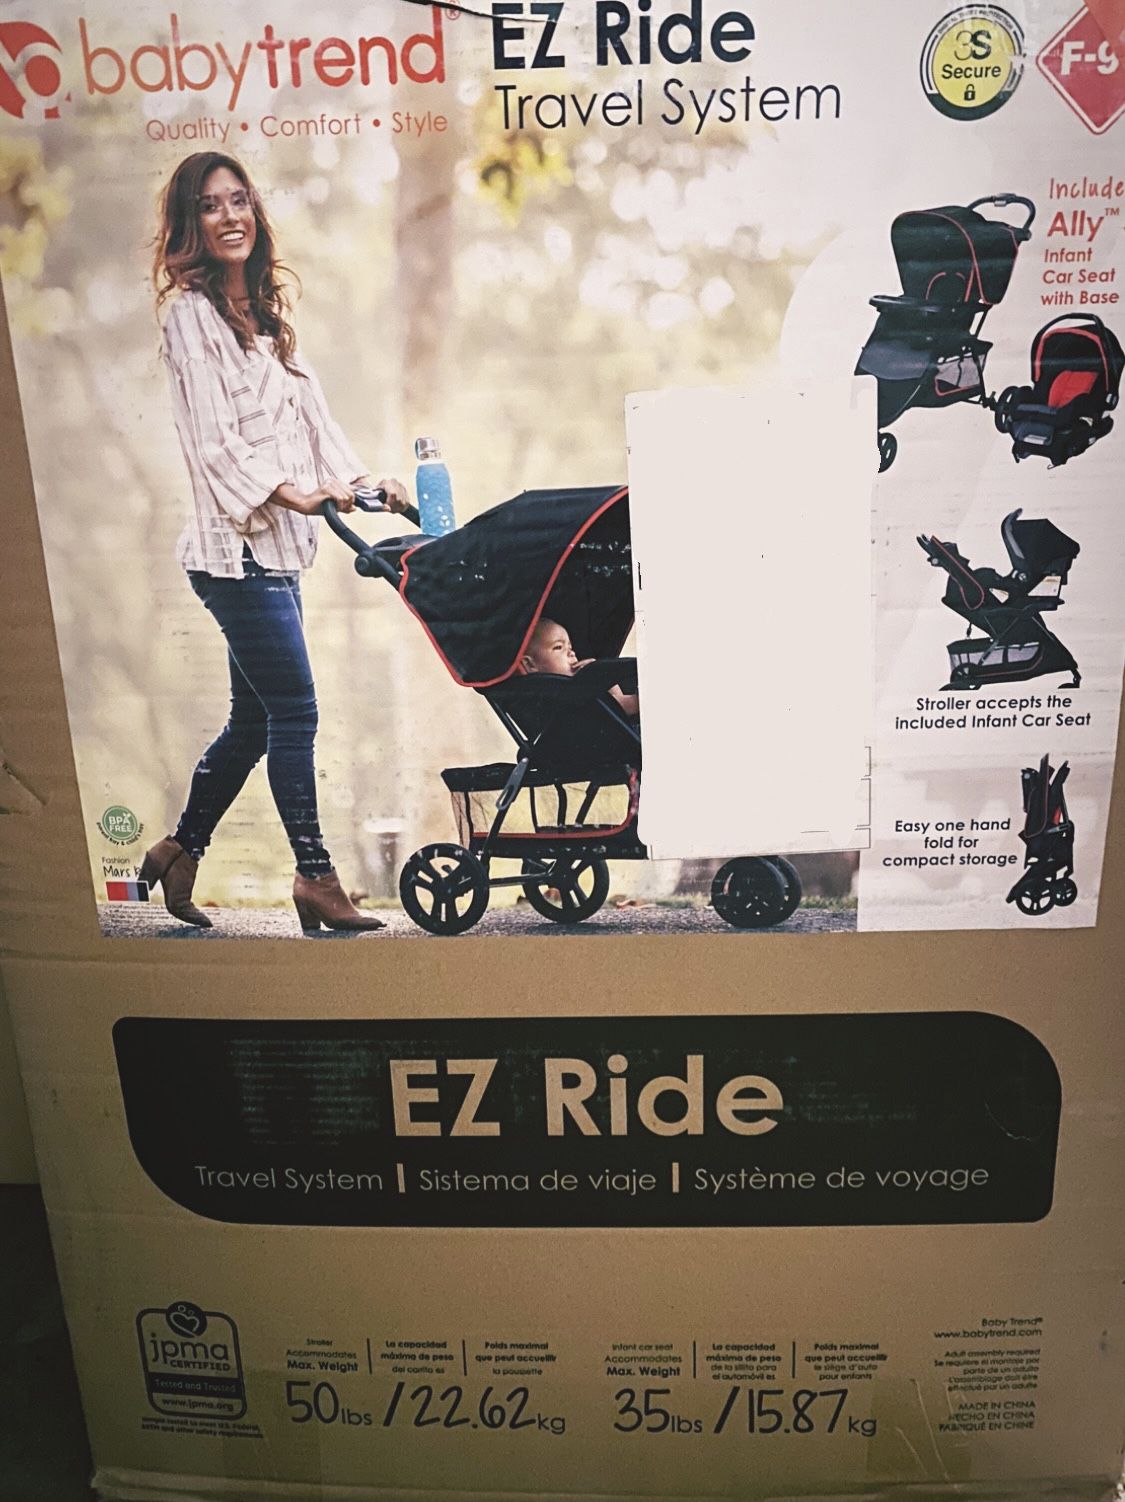 Babytrend EZ Ride Travel System